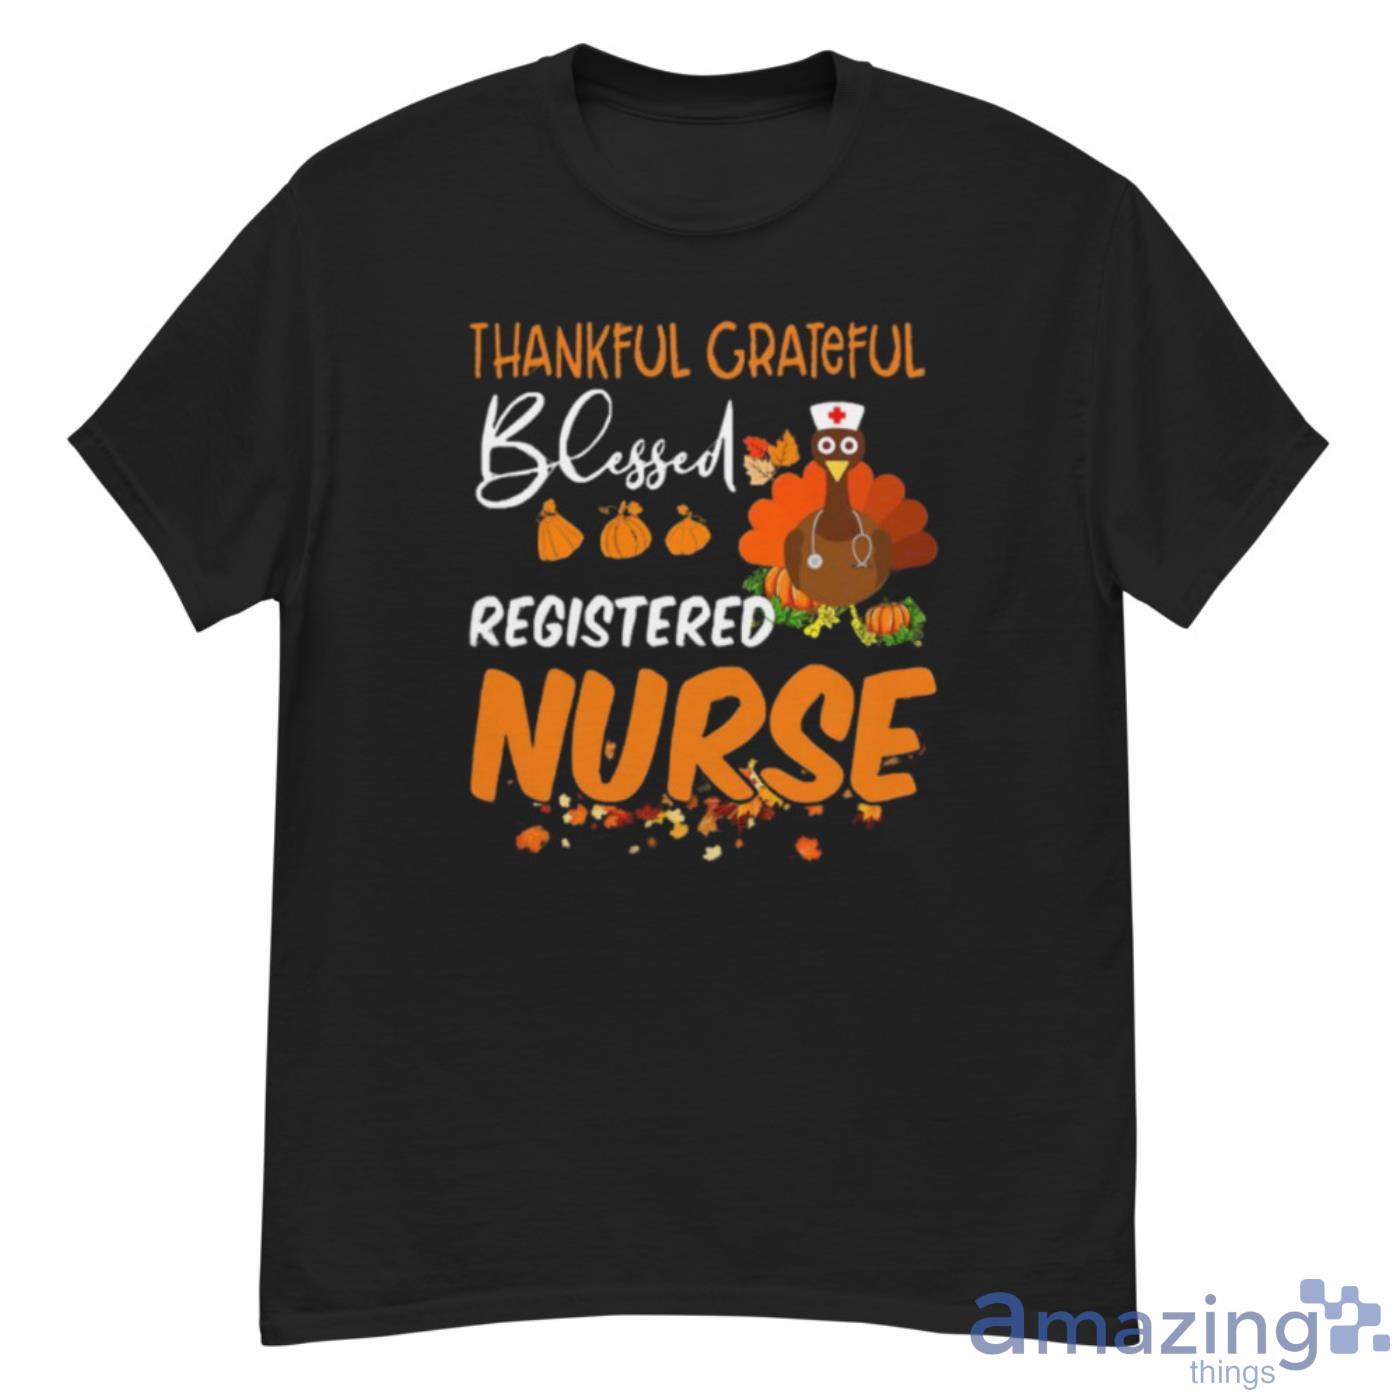 Happy Thankful Grateful Blessed Registered Nurse Thanksgiving Shirt - G500 Men’s Classic T-Shirt